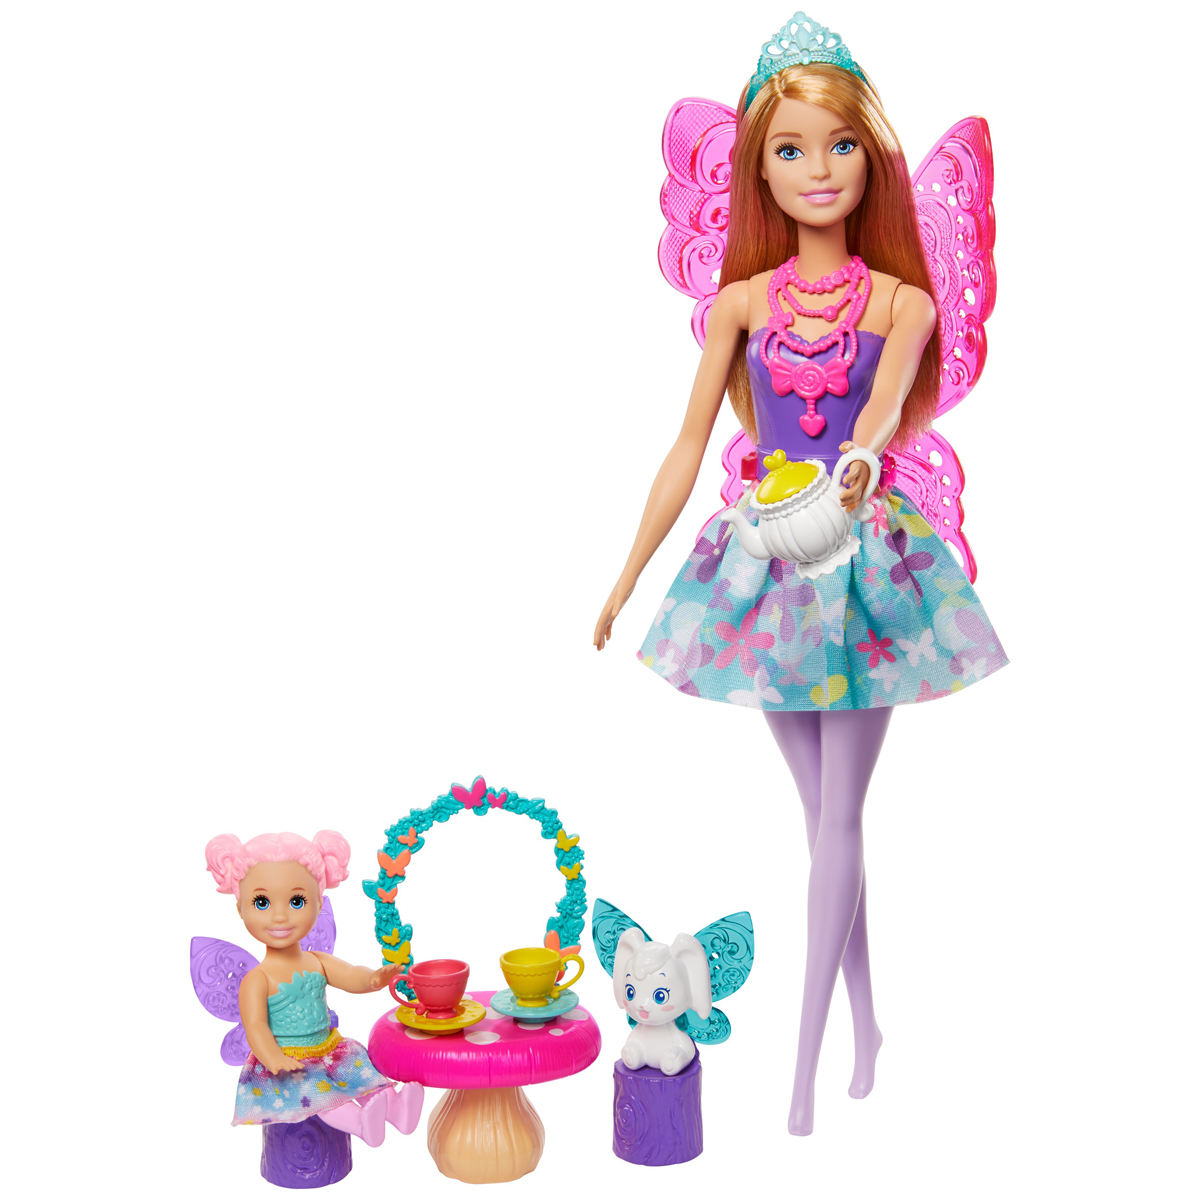 Barbie Dreamtopia Tea Party Doll and Accessories